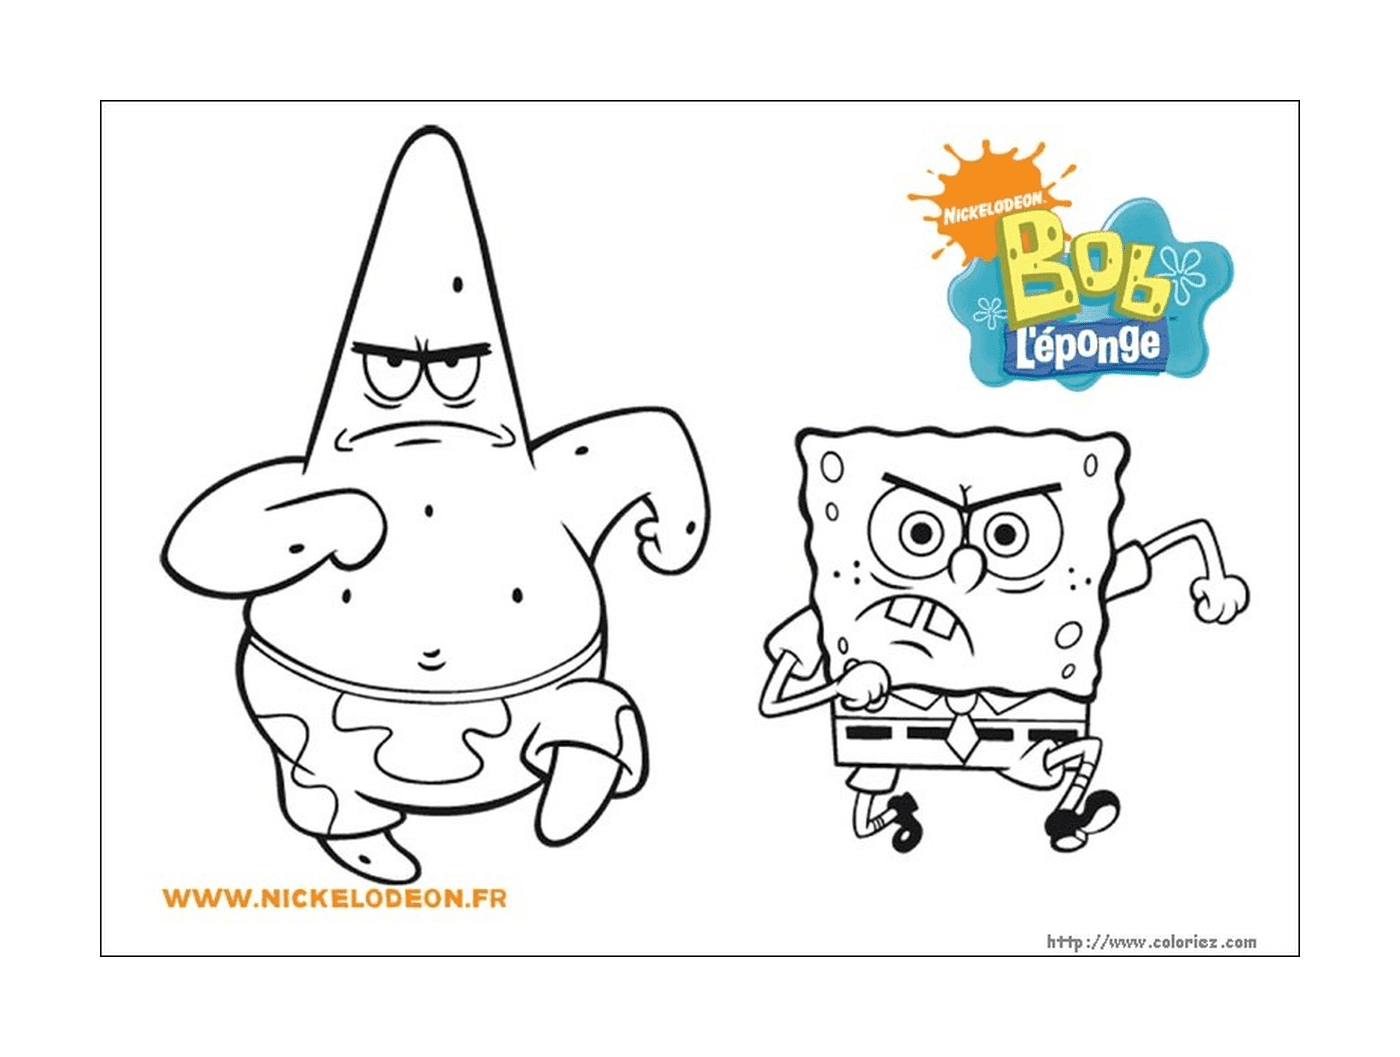  Spongebob and Patrick 